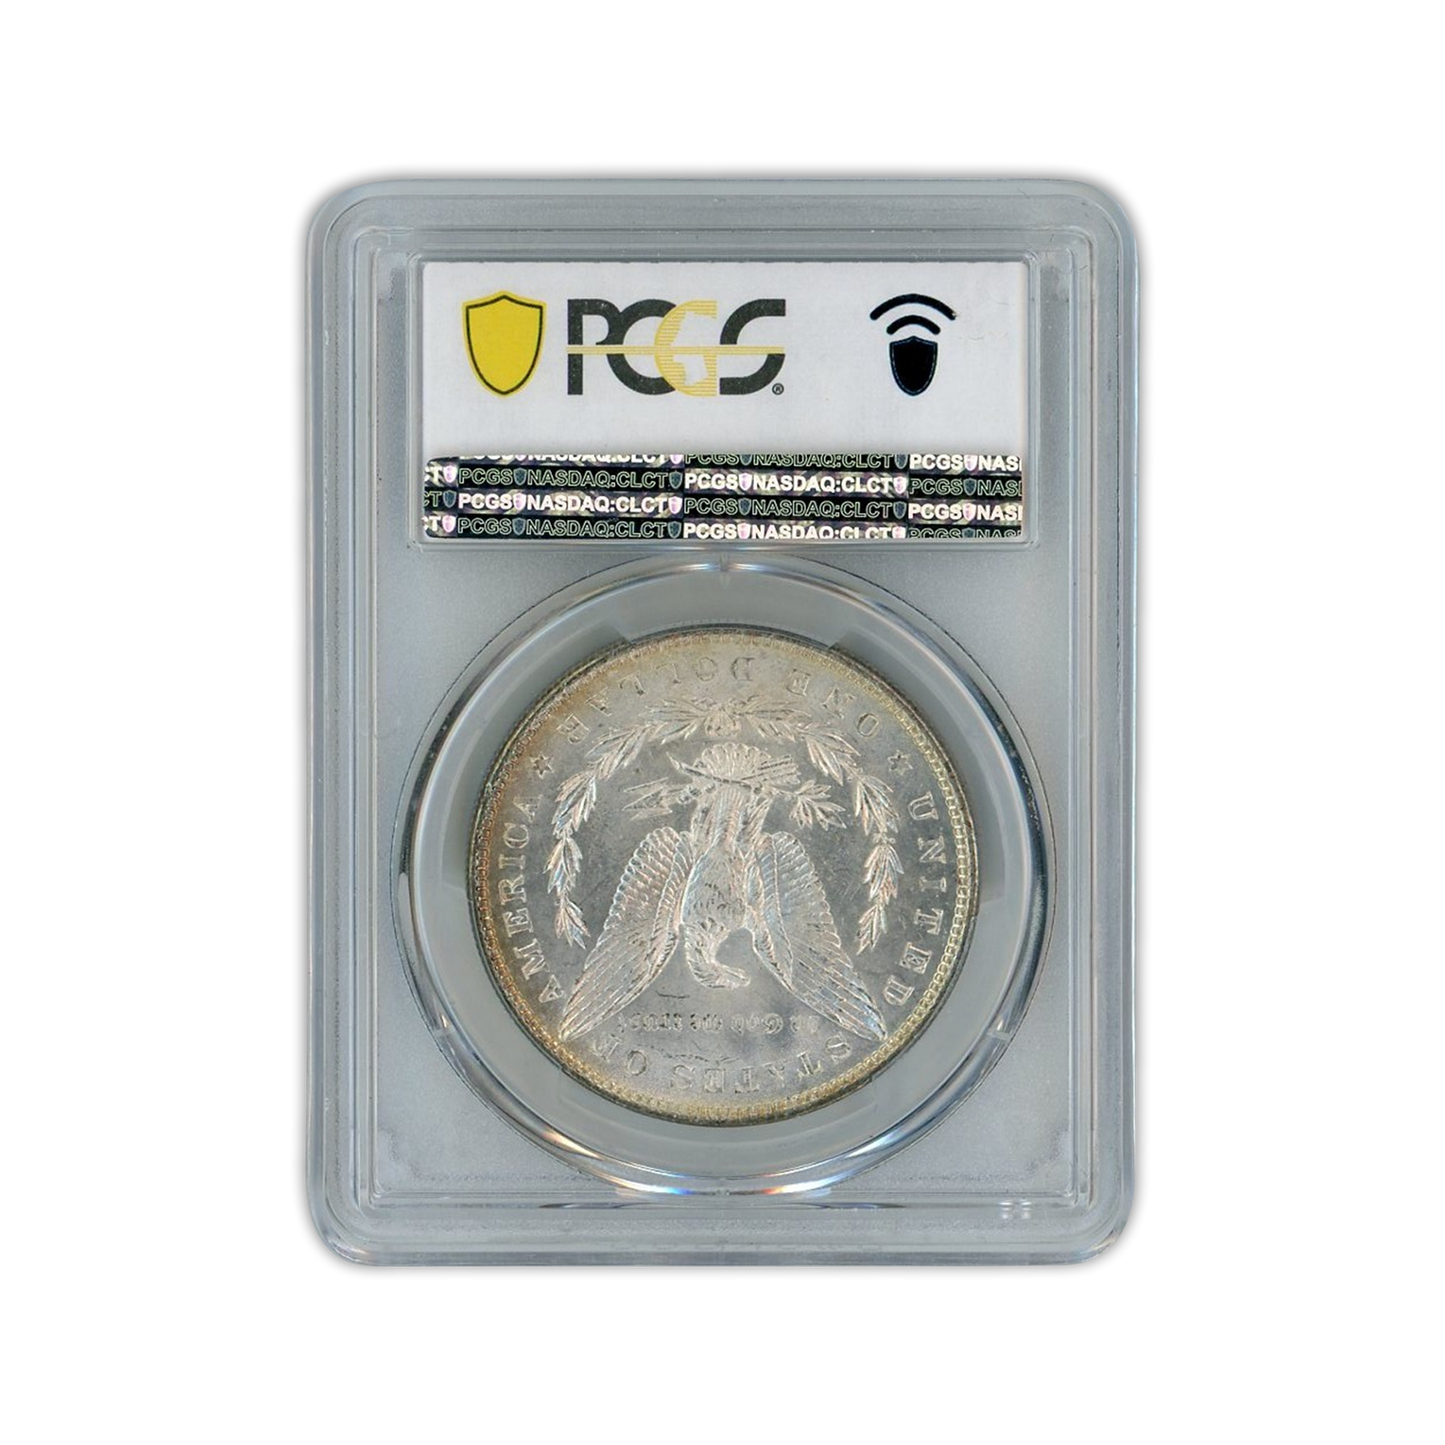 1881 Morgan Silver Dollar Philadelphia - PCGS MS64